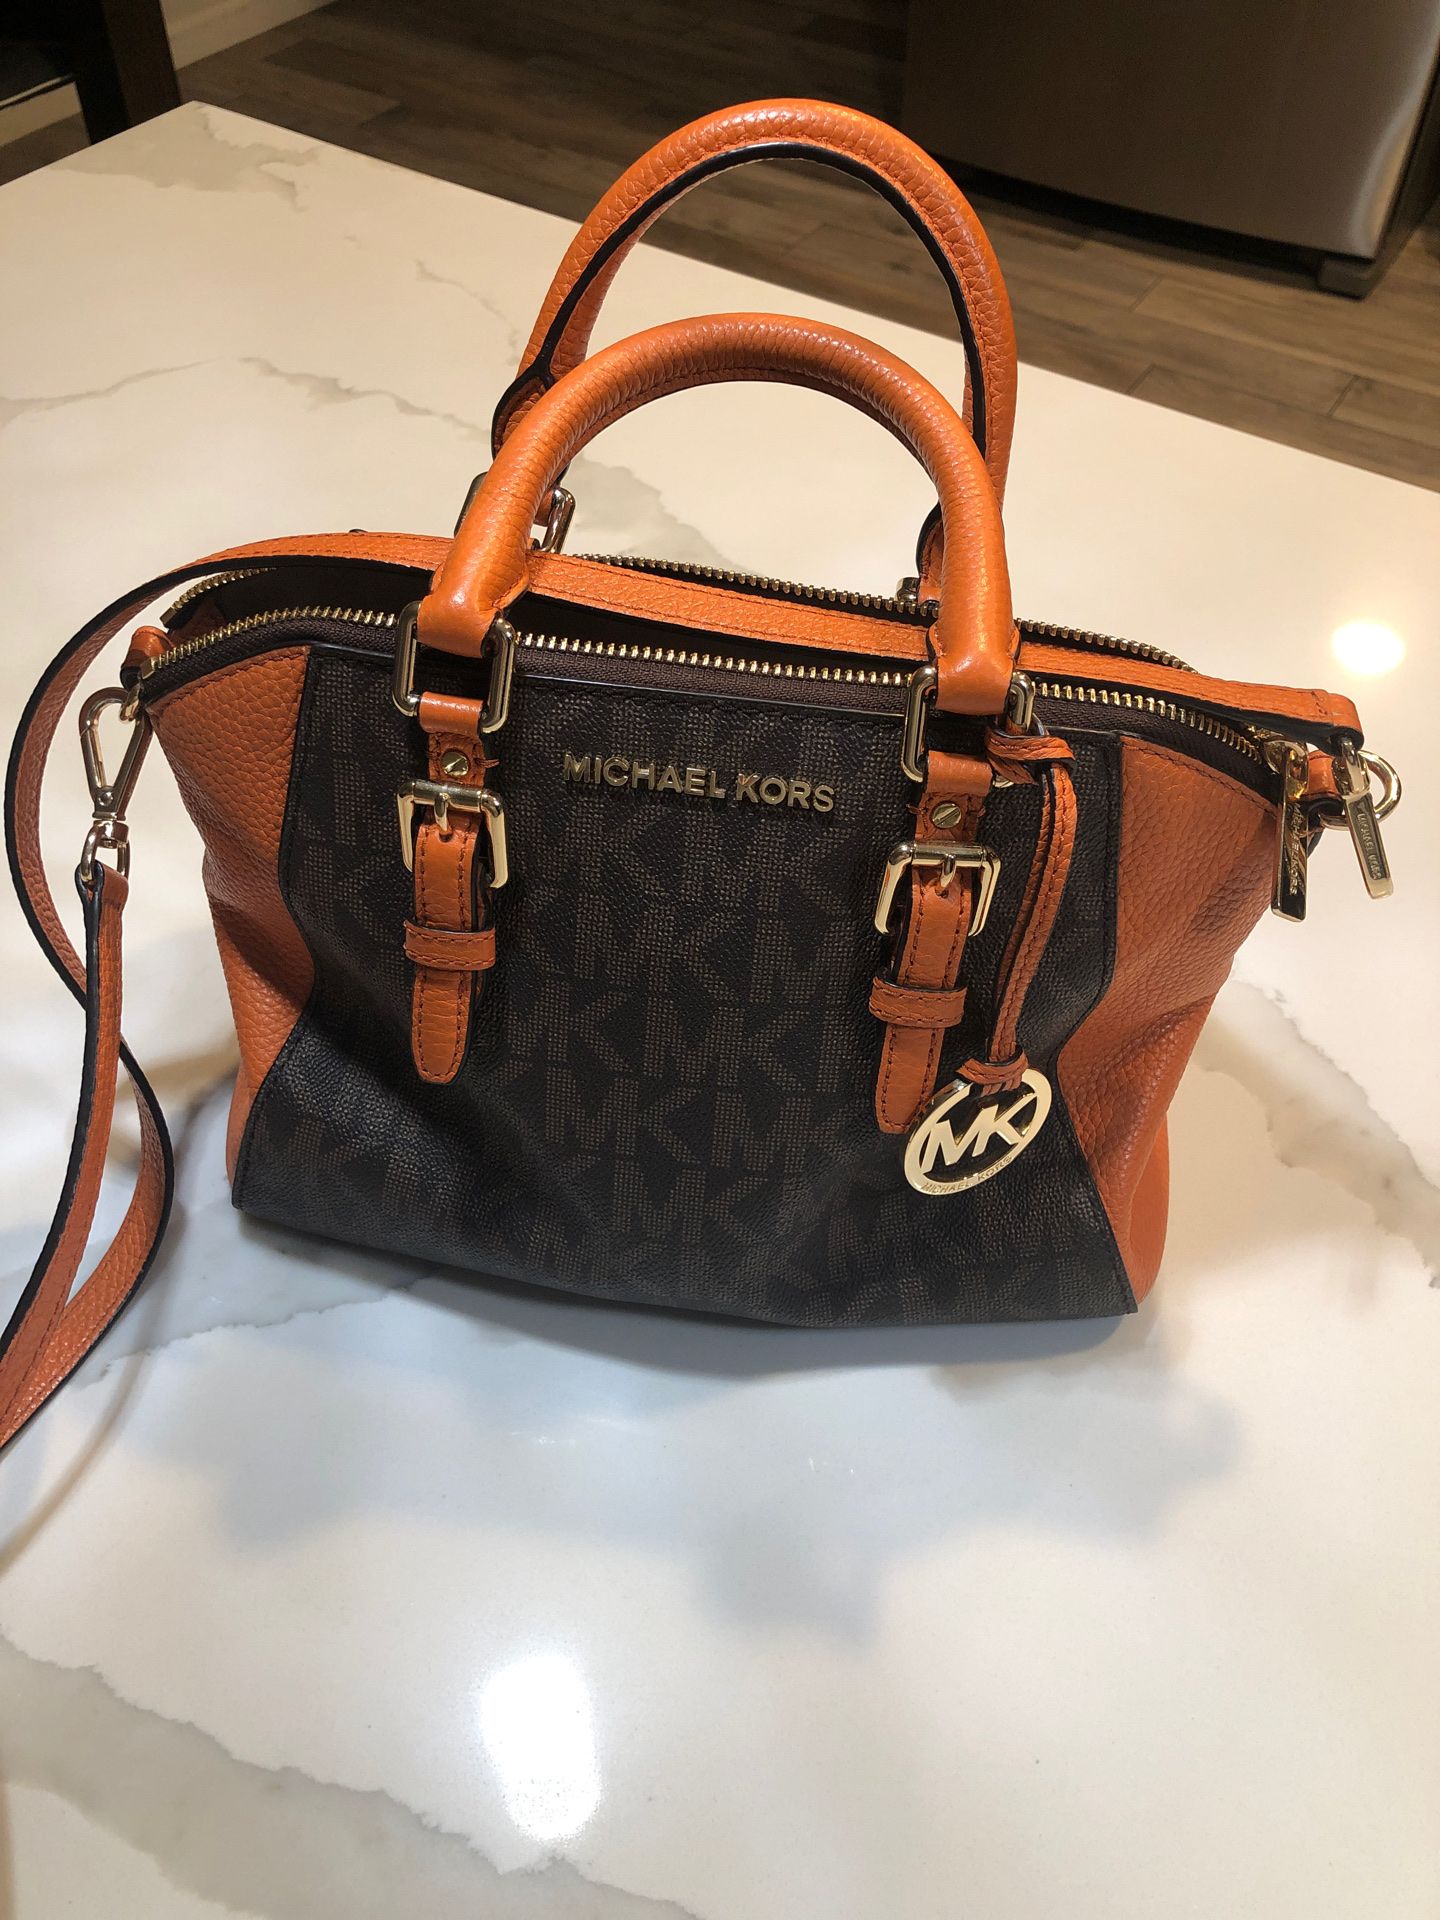 Authentic MK purse